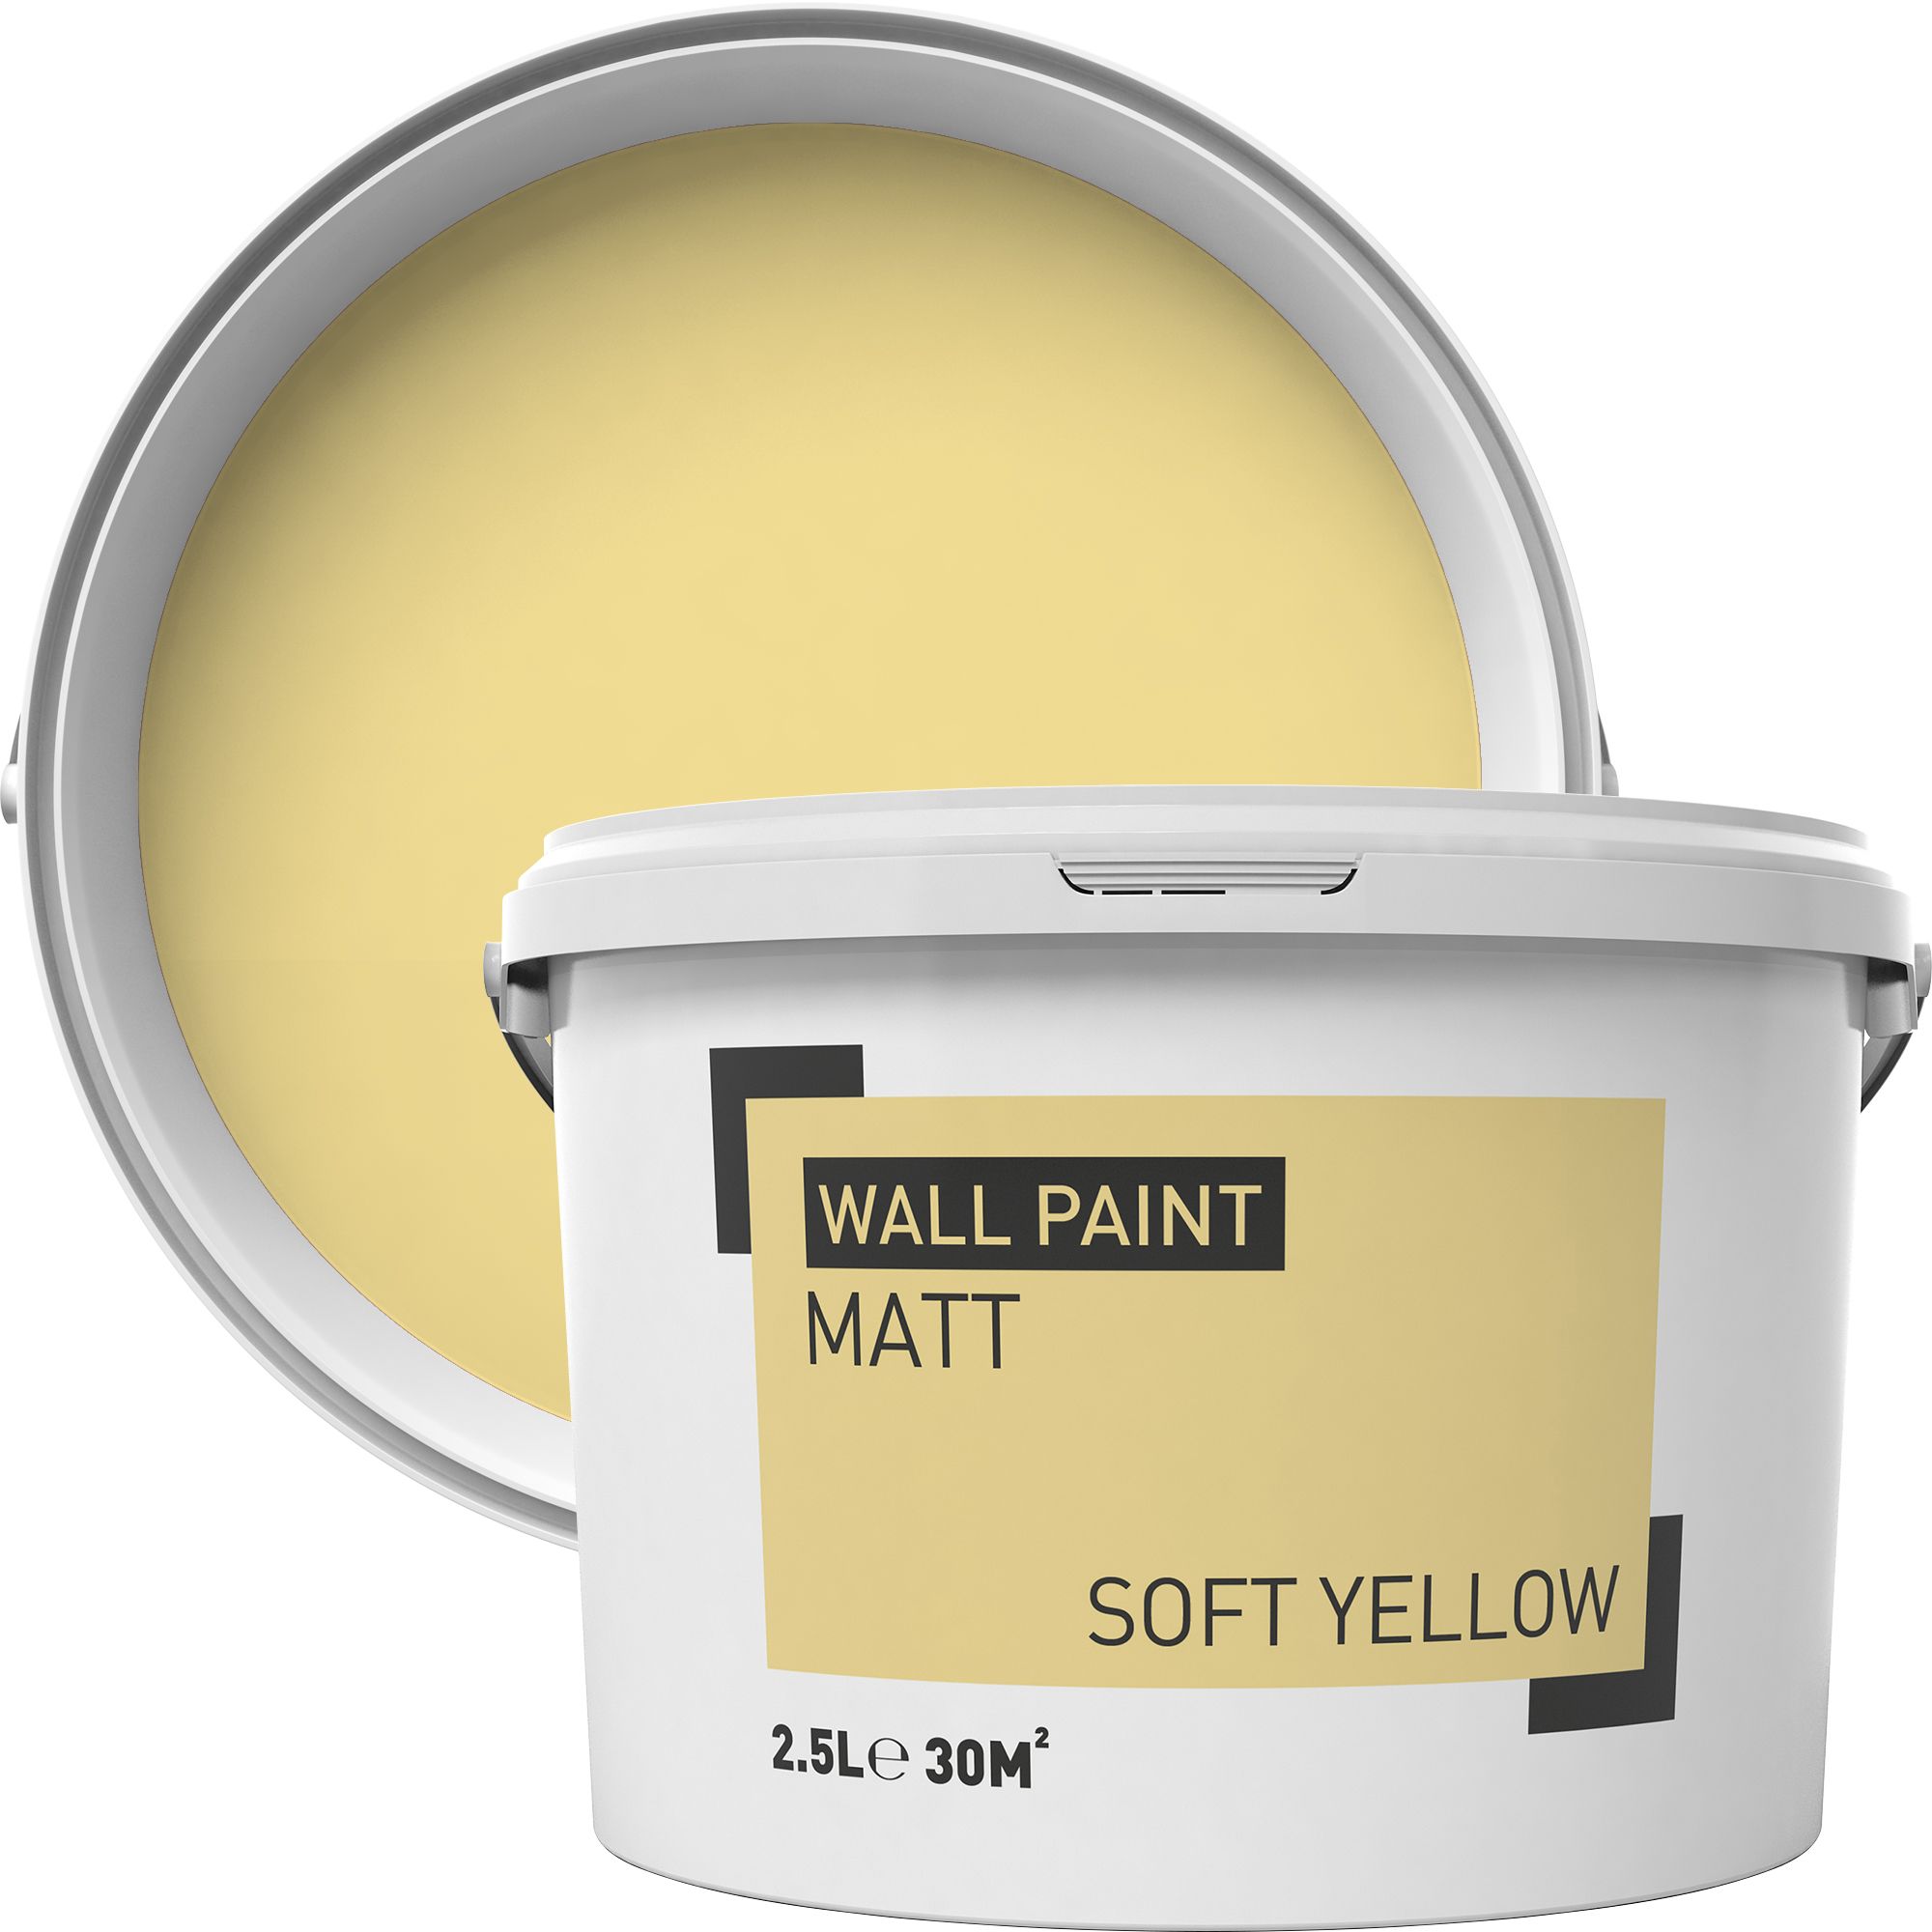 Soft yellow Matt Emulsion paint, 2.5L